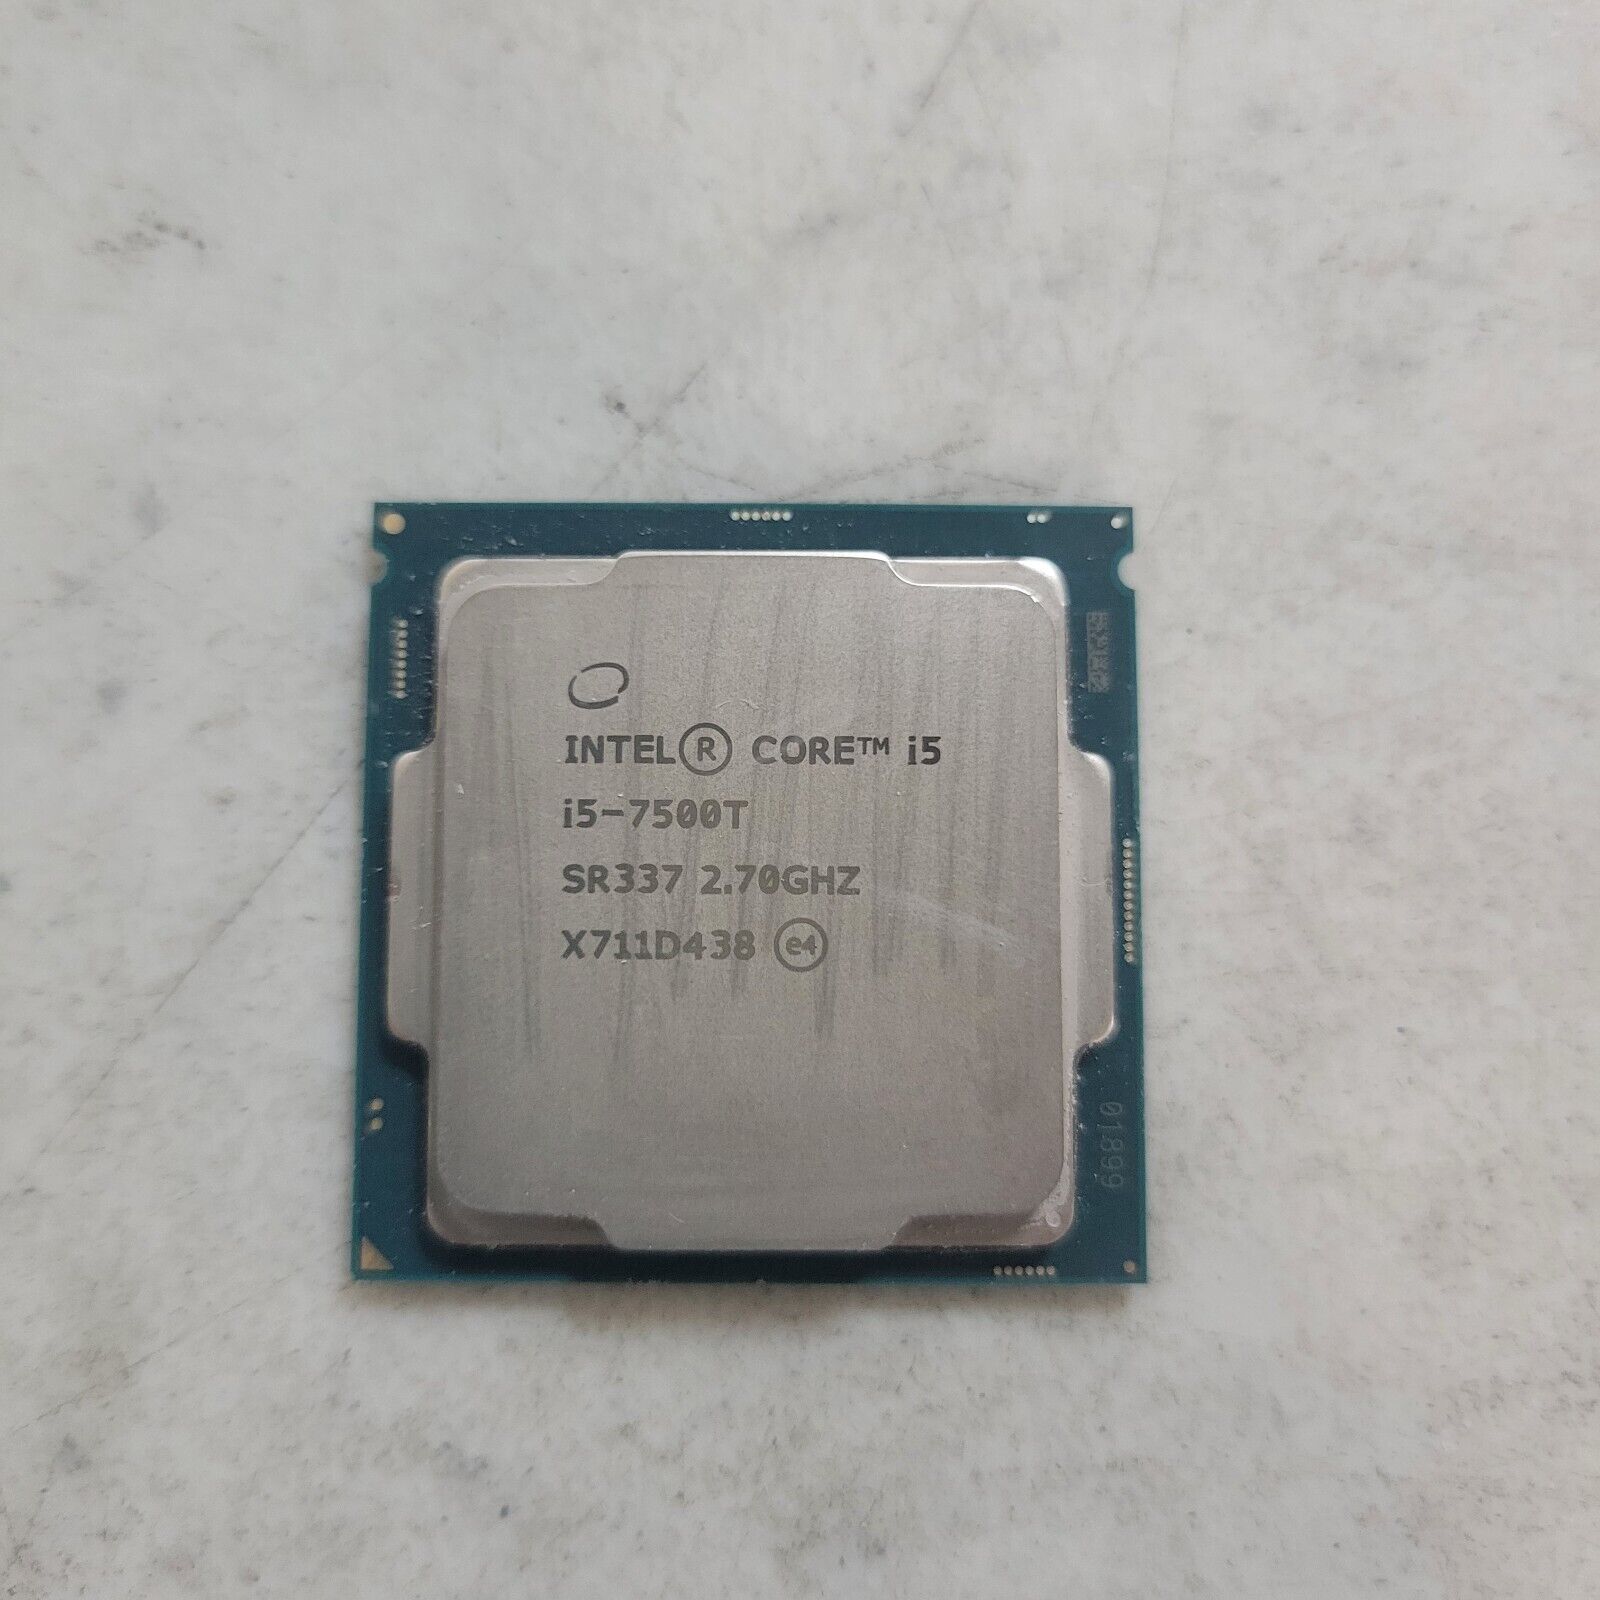 Intel Core i5-7500t 2.70ghz SR337 Processor